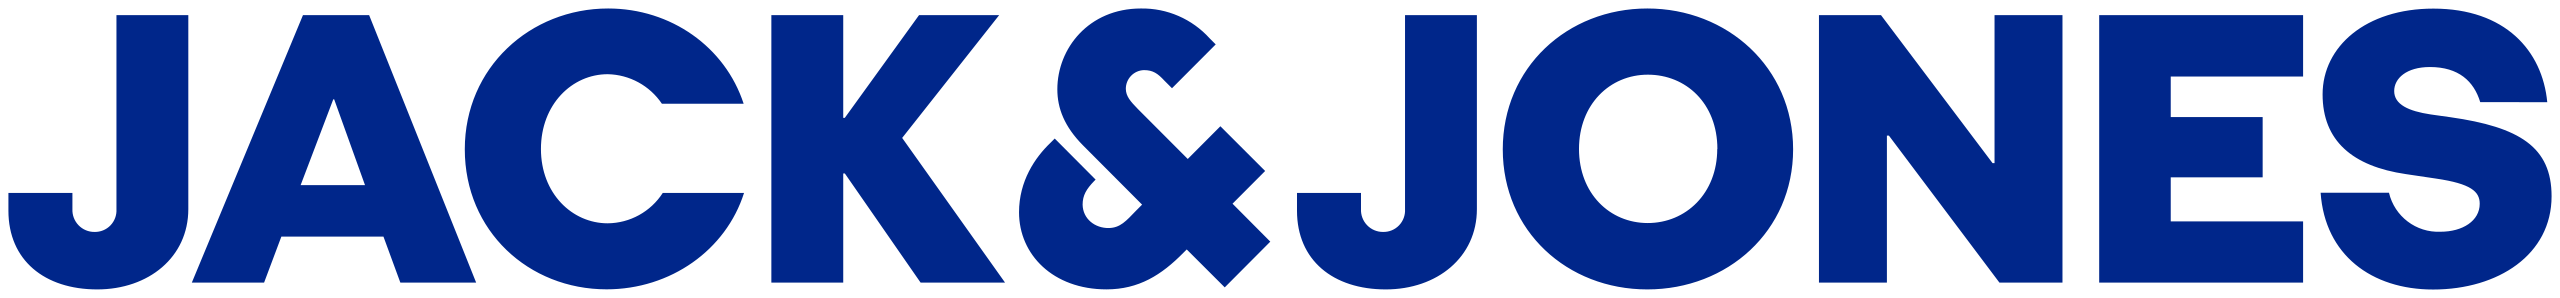 2560px-Jack_&_Jones_logo.svg